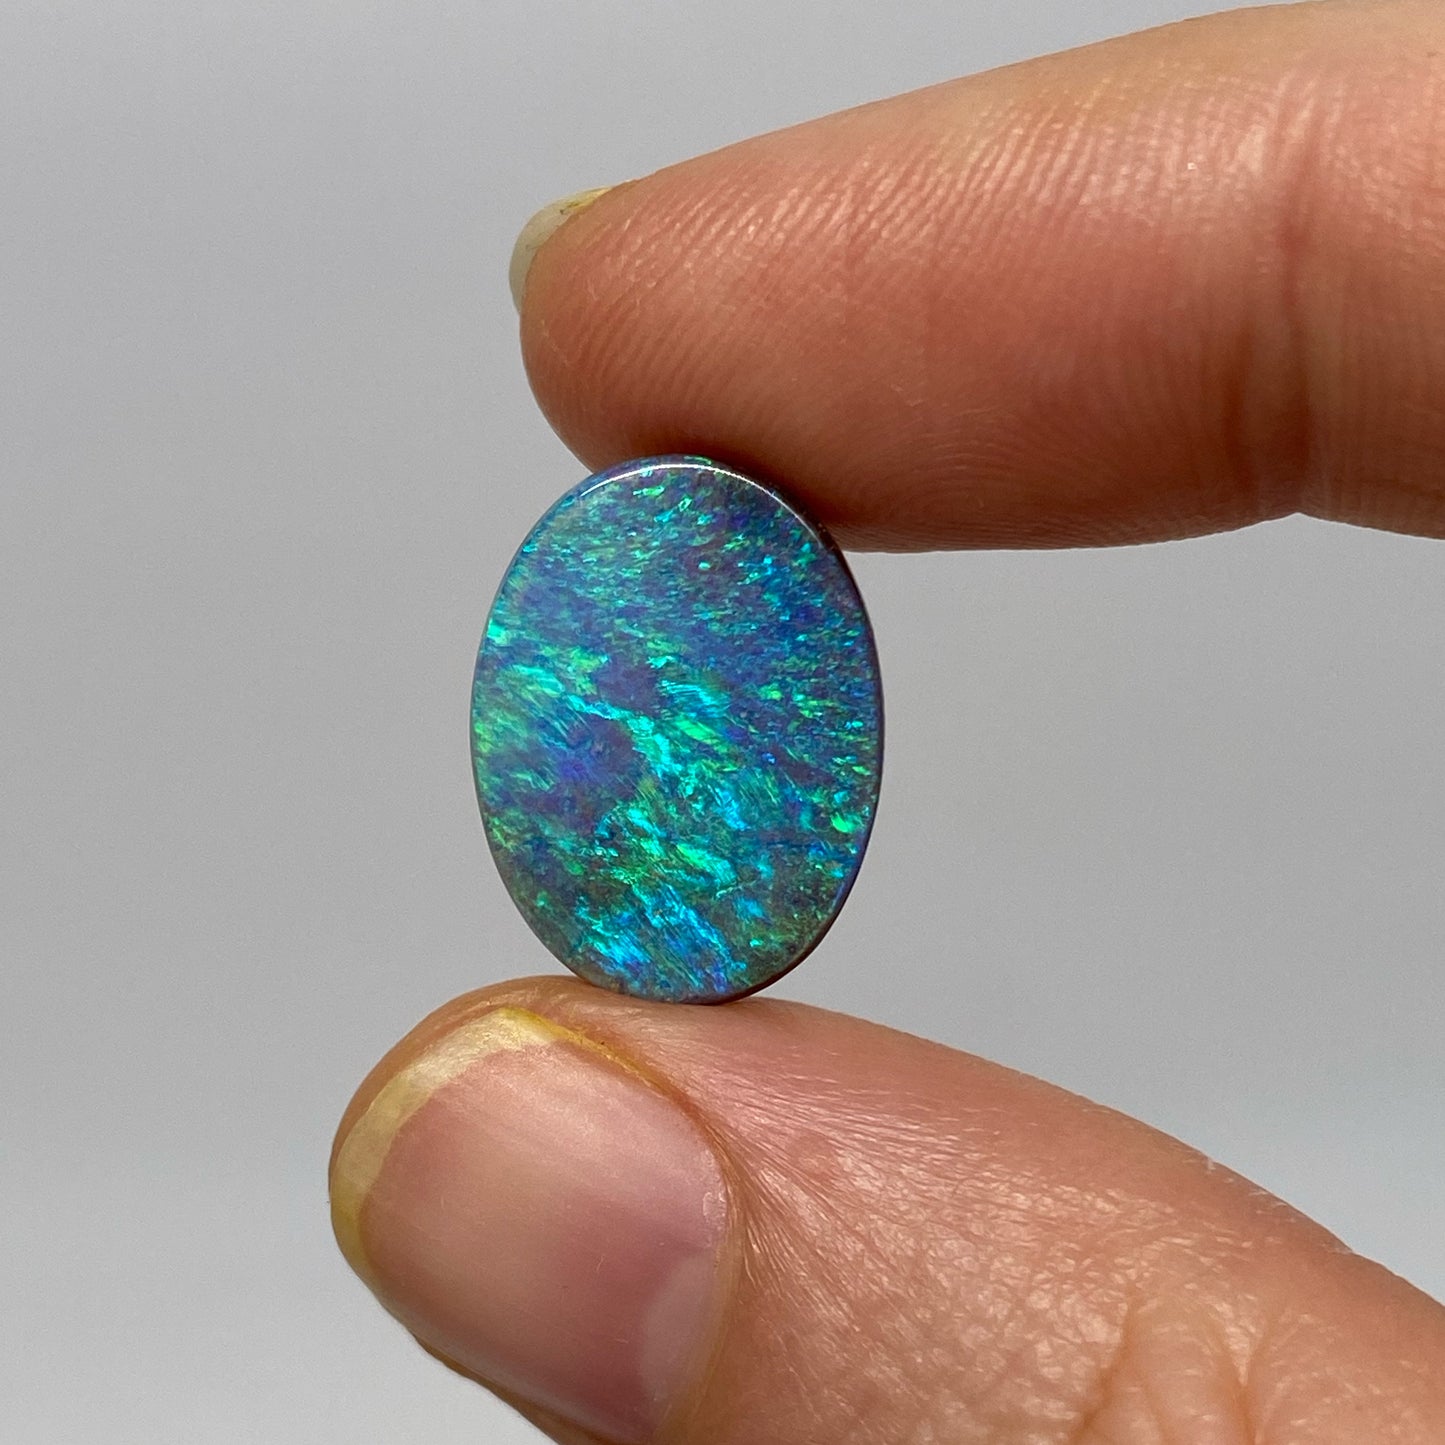 14.02 Ct oval boulder opal pair